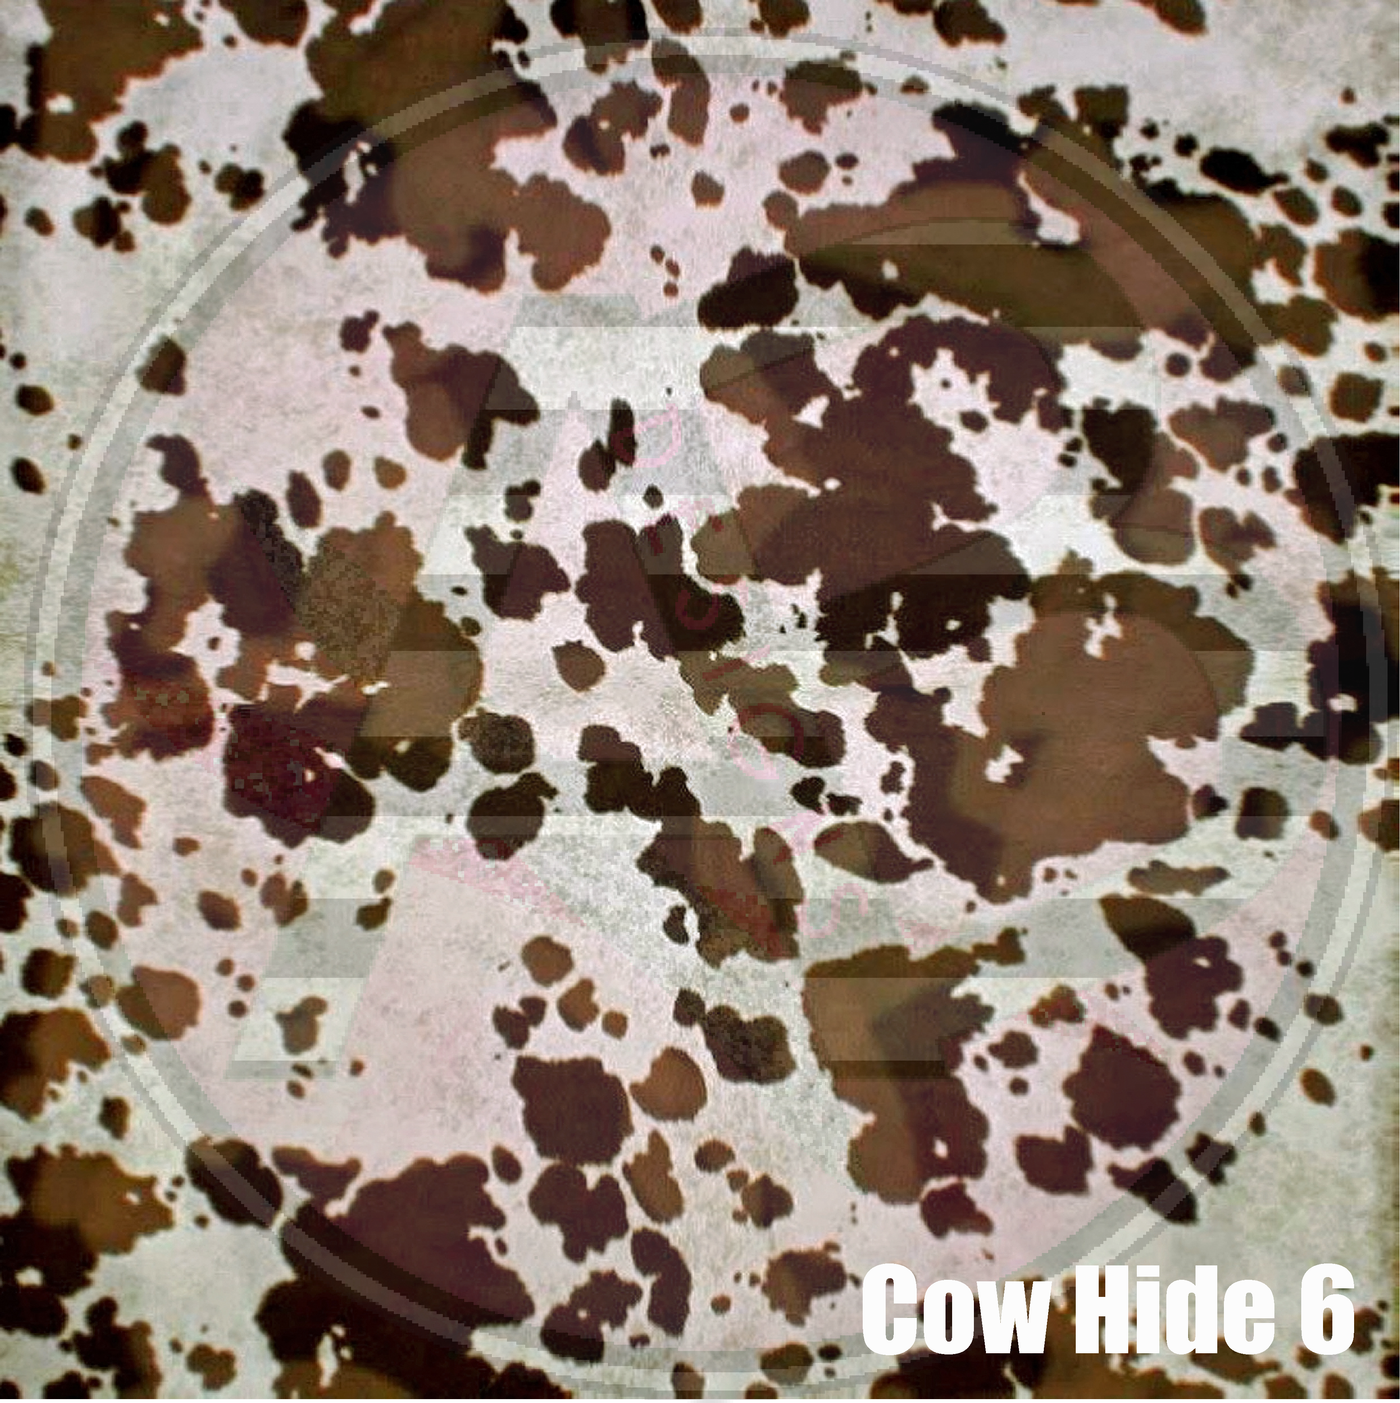 Adhesive Patterned Vinyl - Cow Hide 6